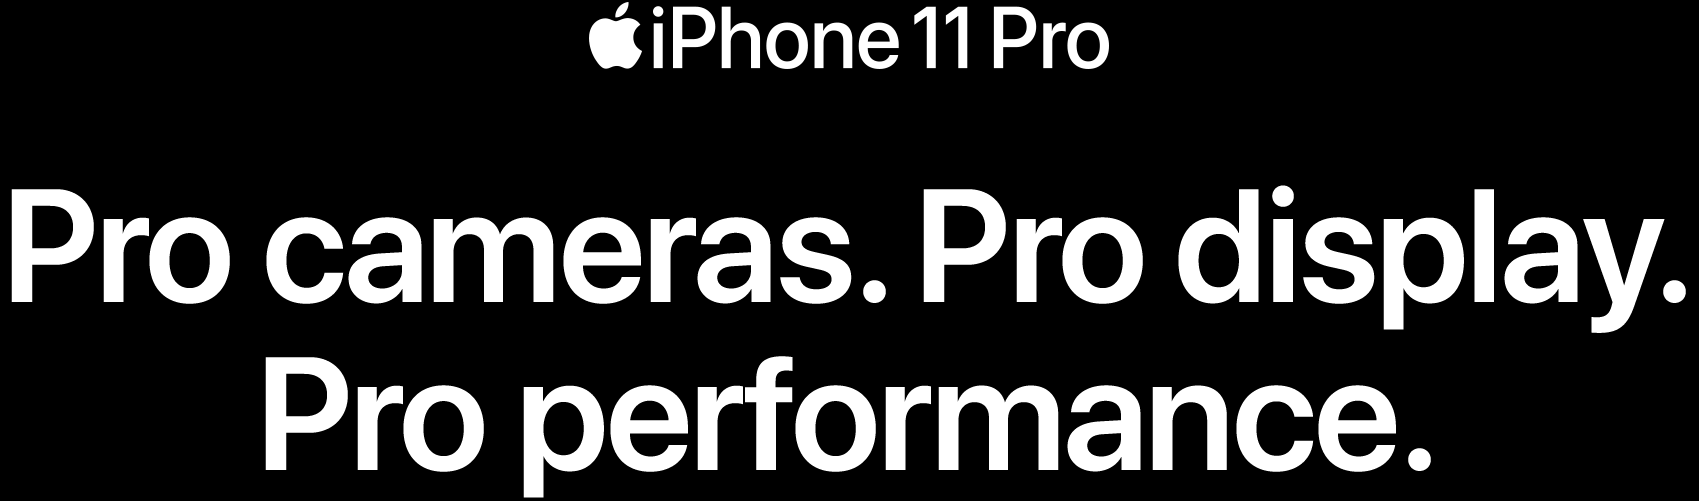 Apple iPhone 11 Pro. Pro cameras. Pro display. Pro performance.